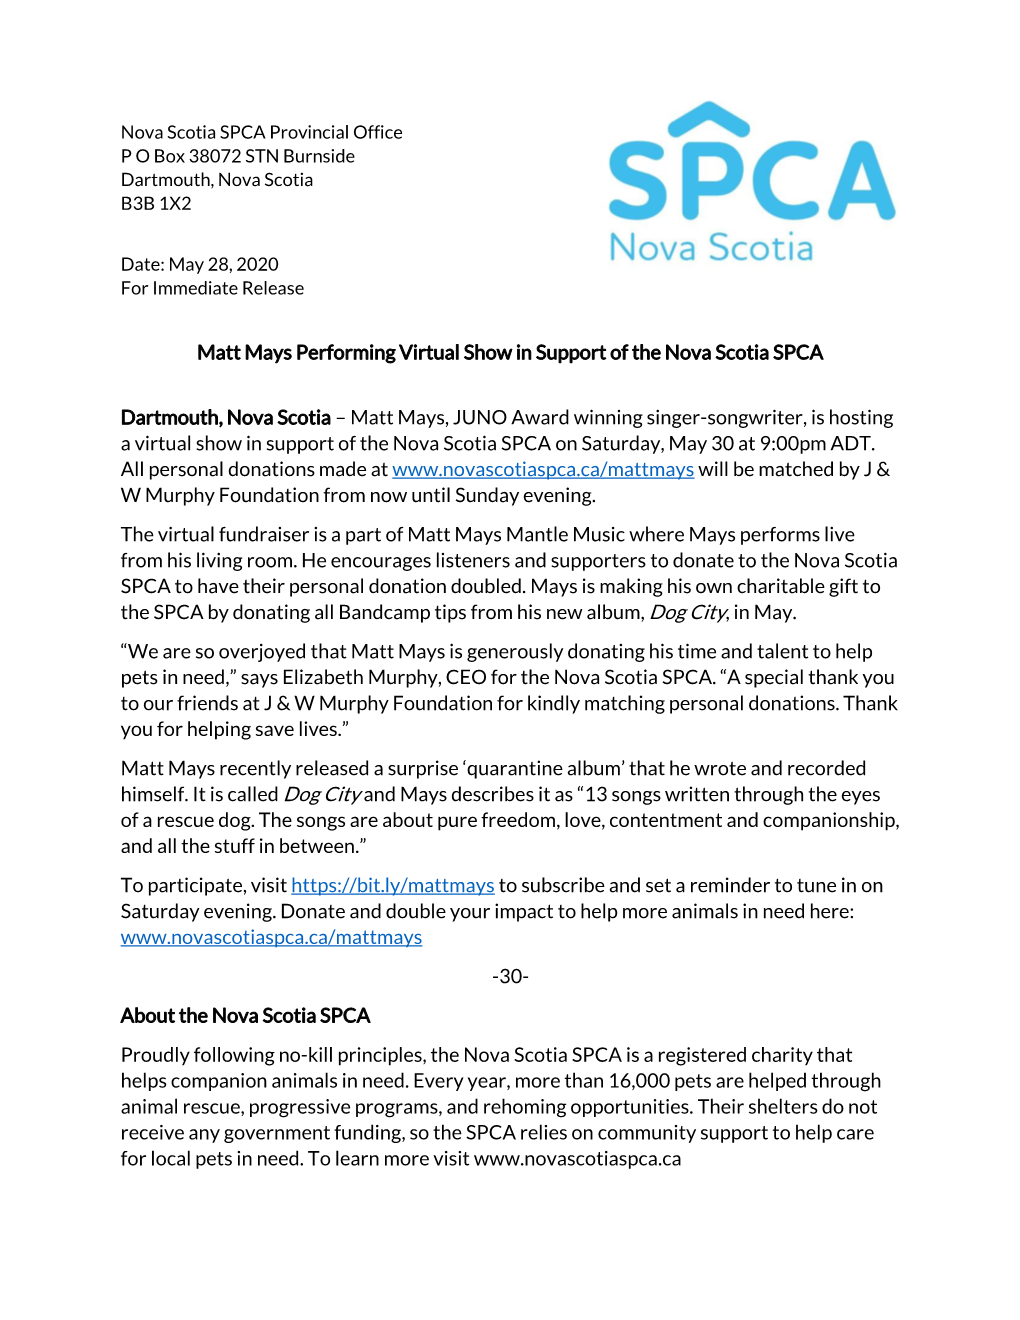 Matt Mays Performing Virtual Show in Support of the Nova Scotia SPCA